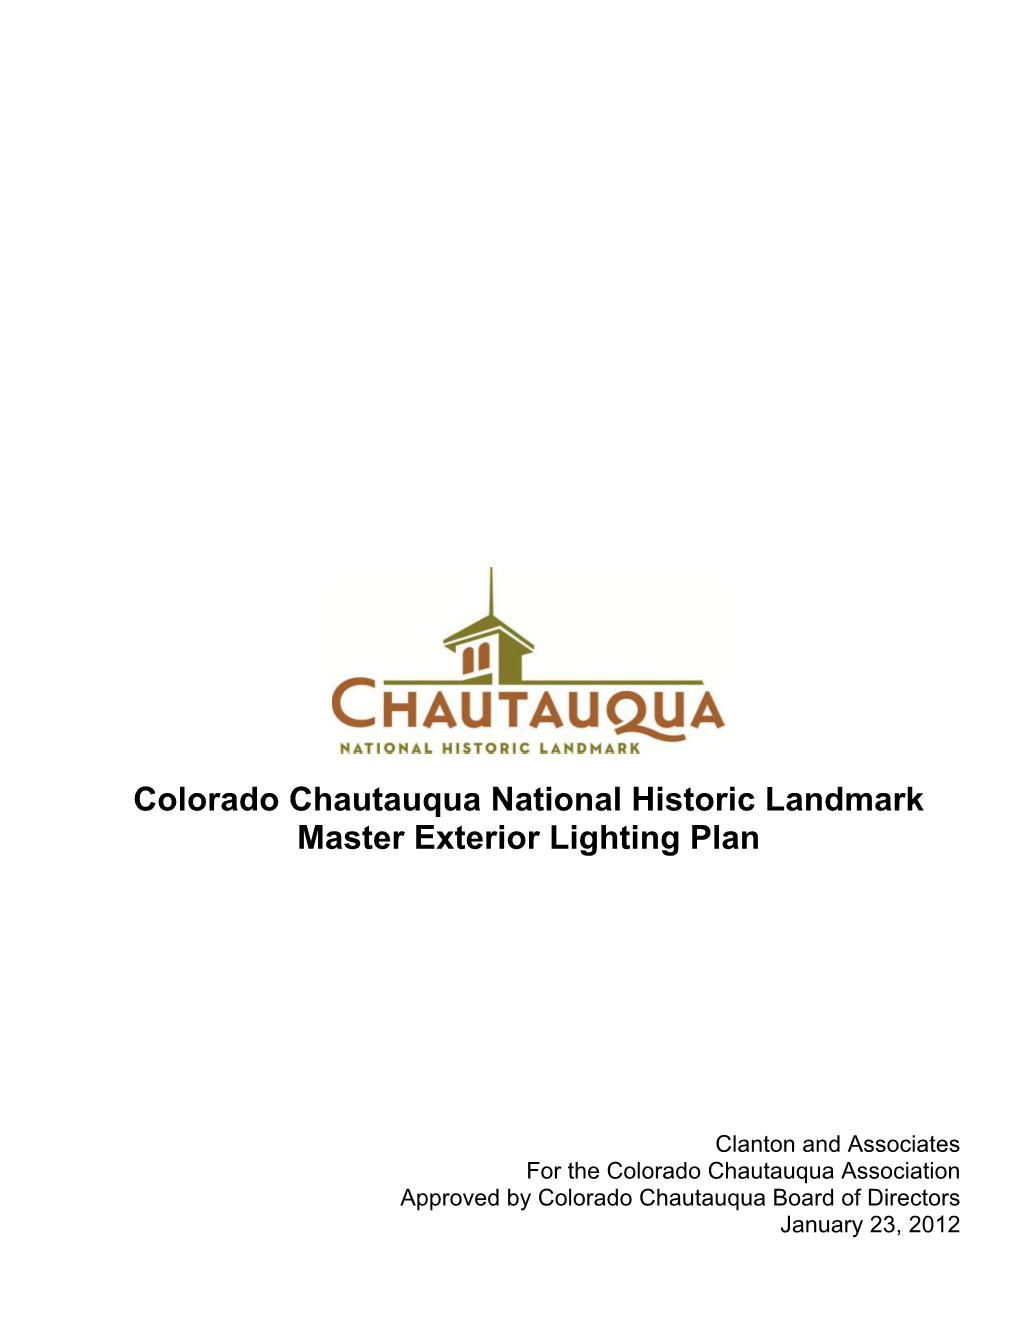 Colorado Chautauqua National Historic Landmark Master Exterior Lighting Plan